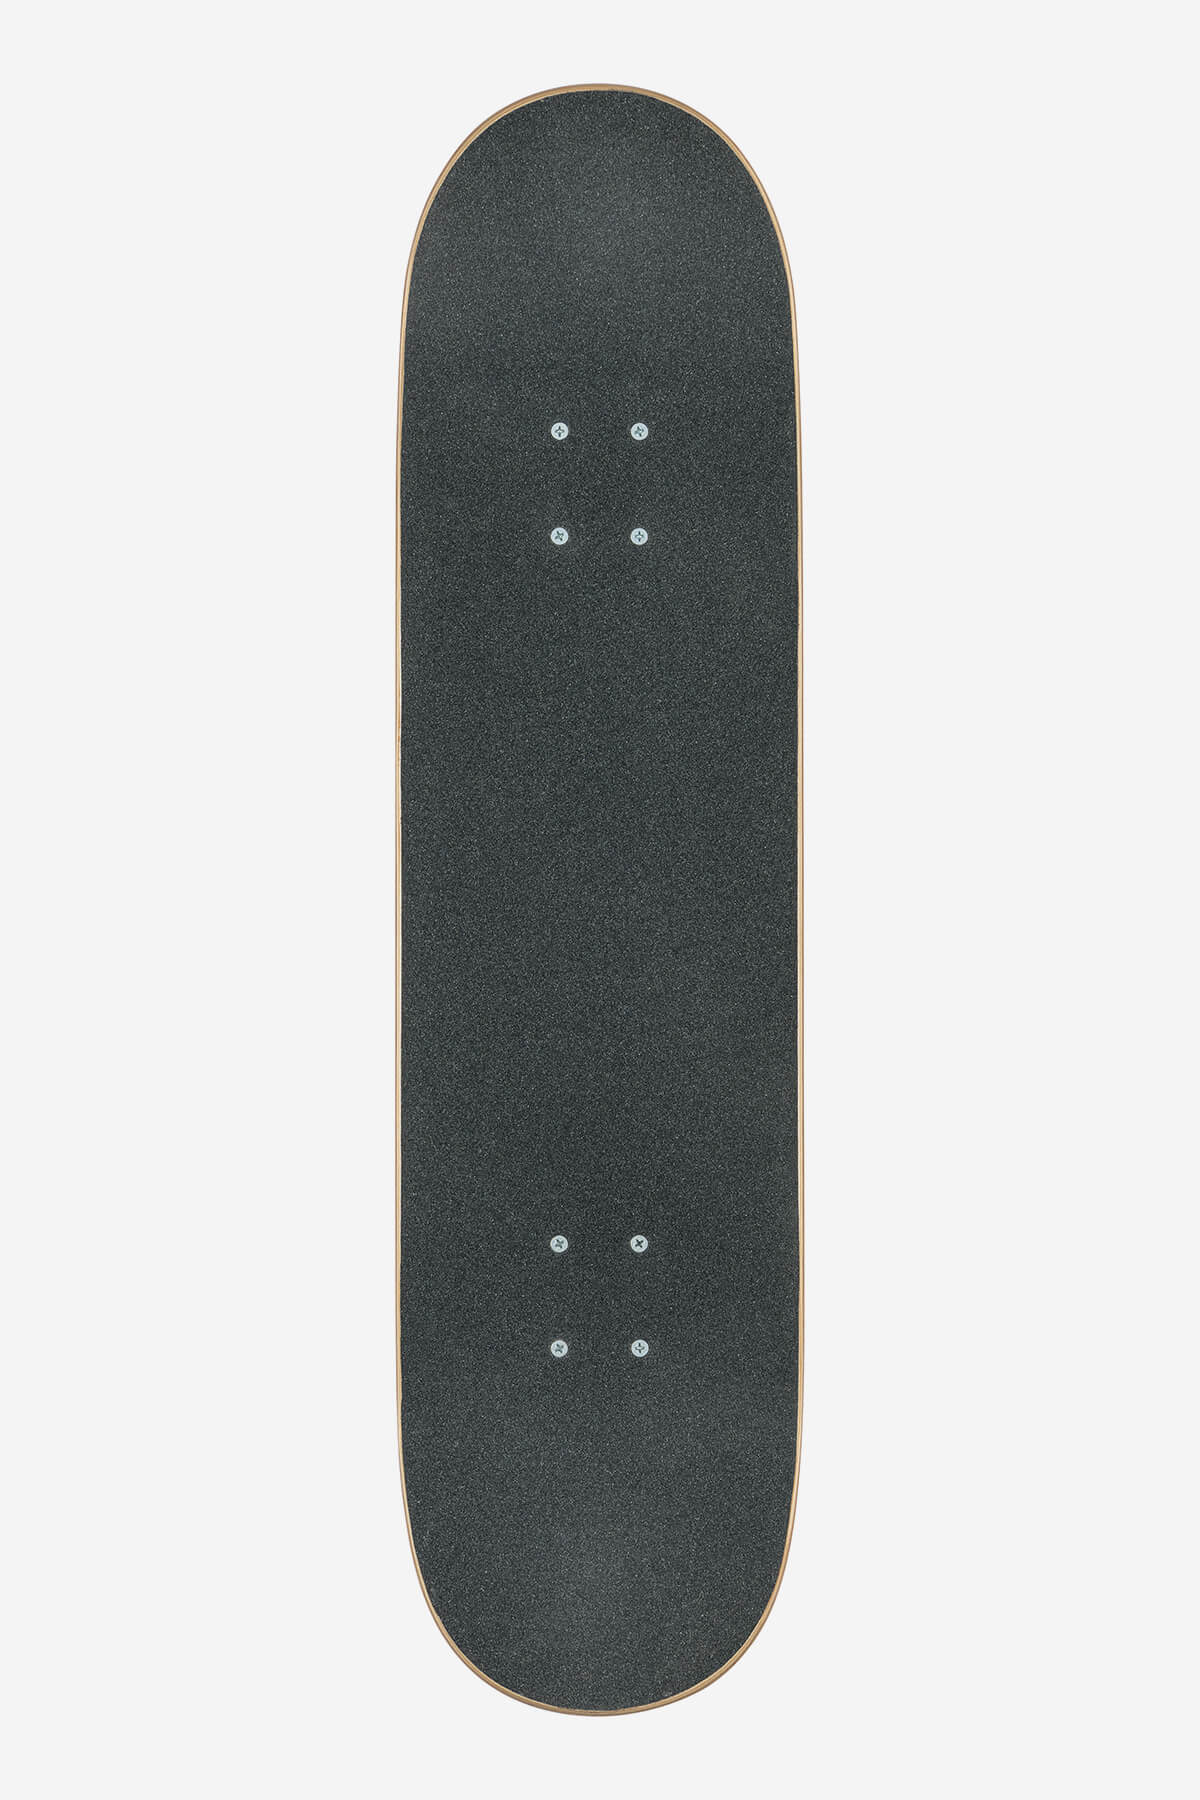 Globe - G0 Fubar - Red/White - 8,25" Compleet Skateboard